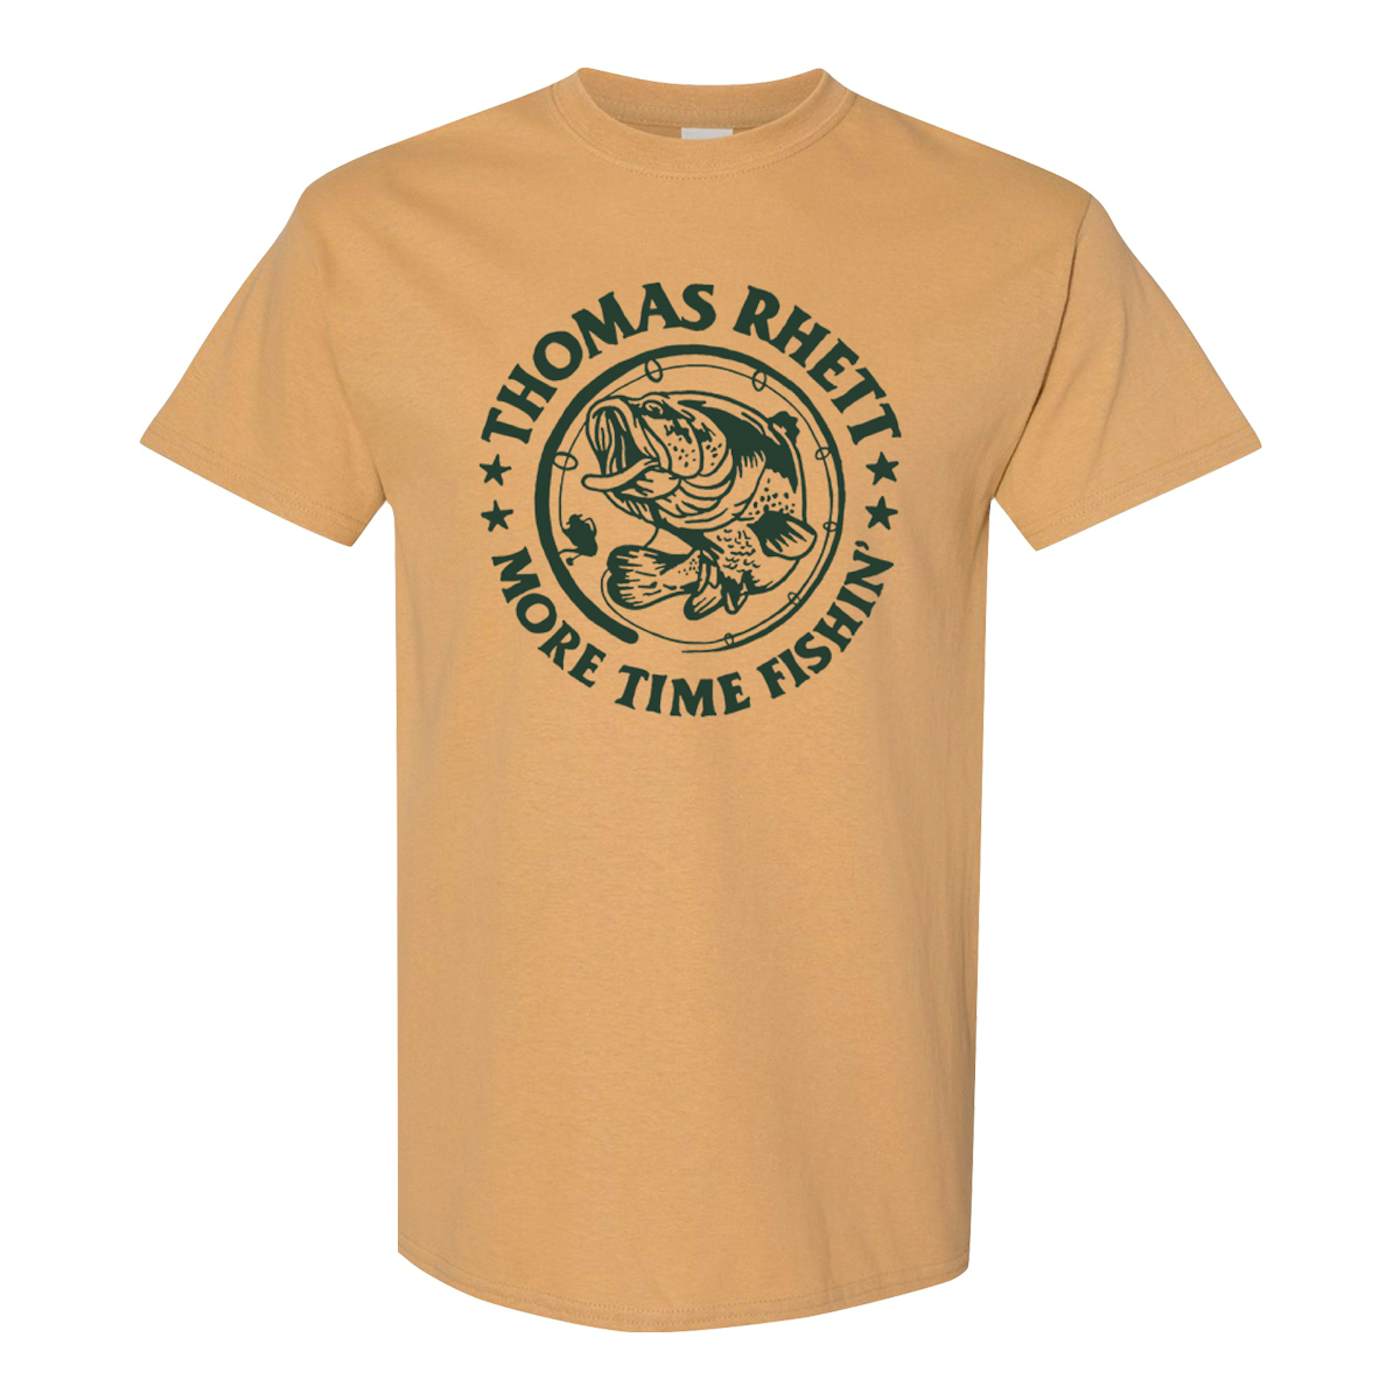 Thomas Rhett More Time Fishin' Yellow T-Shirt